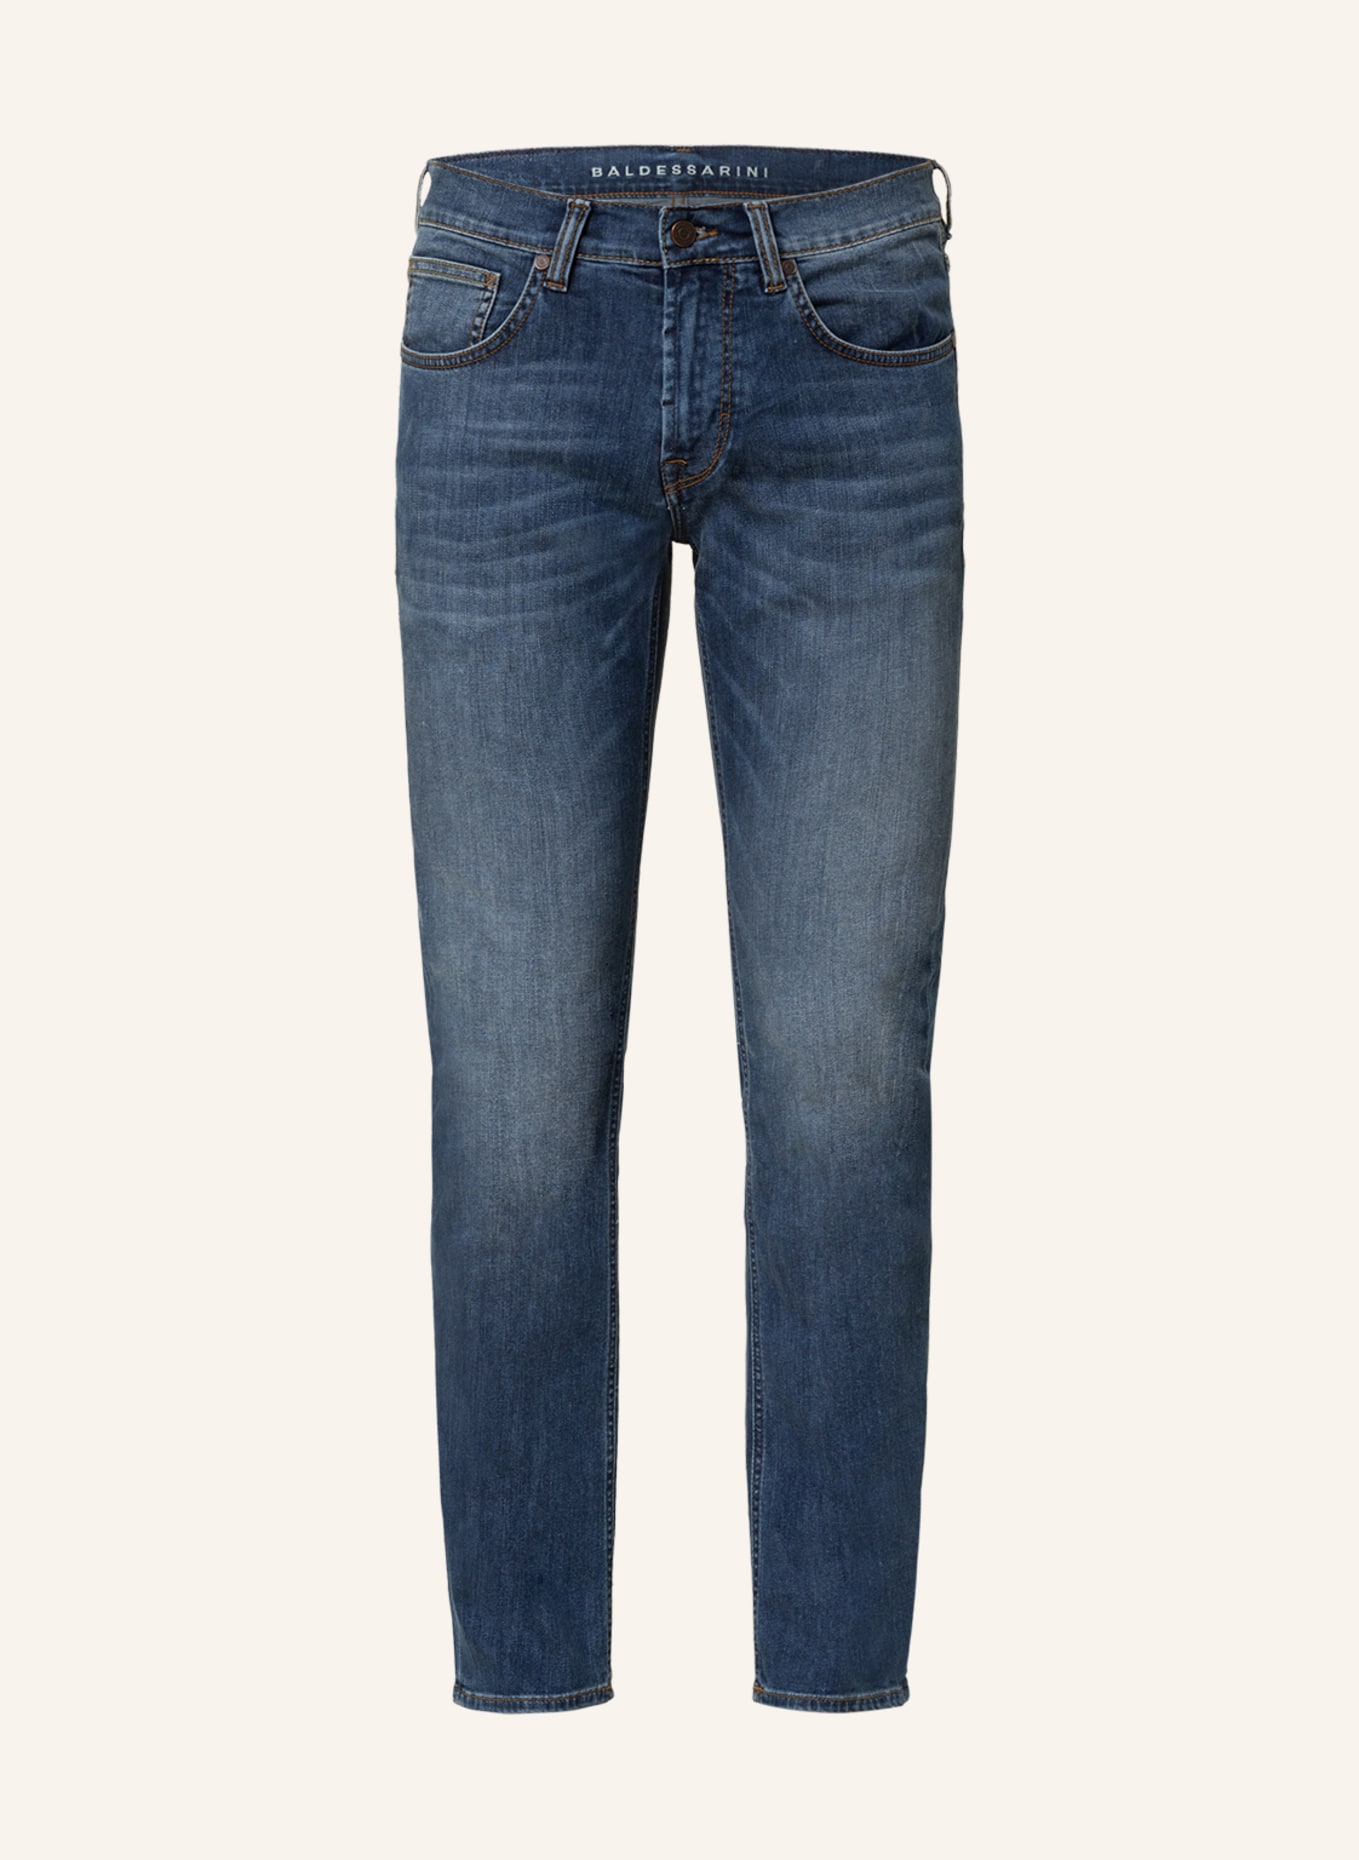 BALDESSARINI Jeans Regular Fit, Color: 6855 light blue used buffies (Image 1)